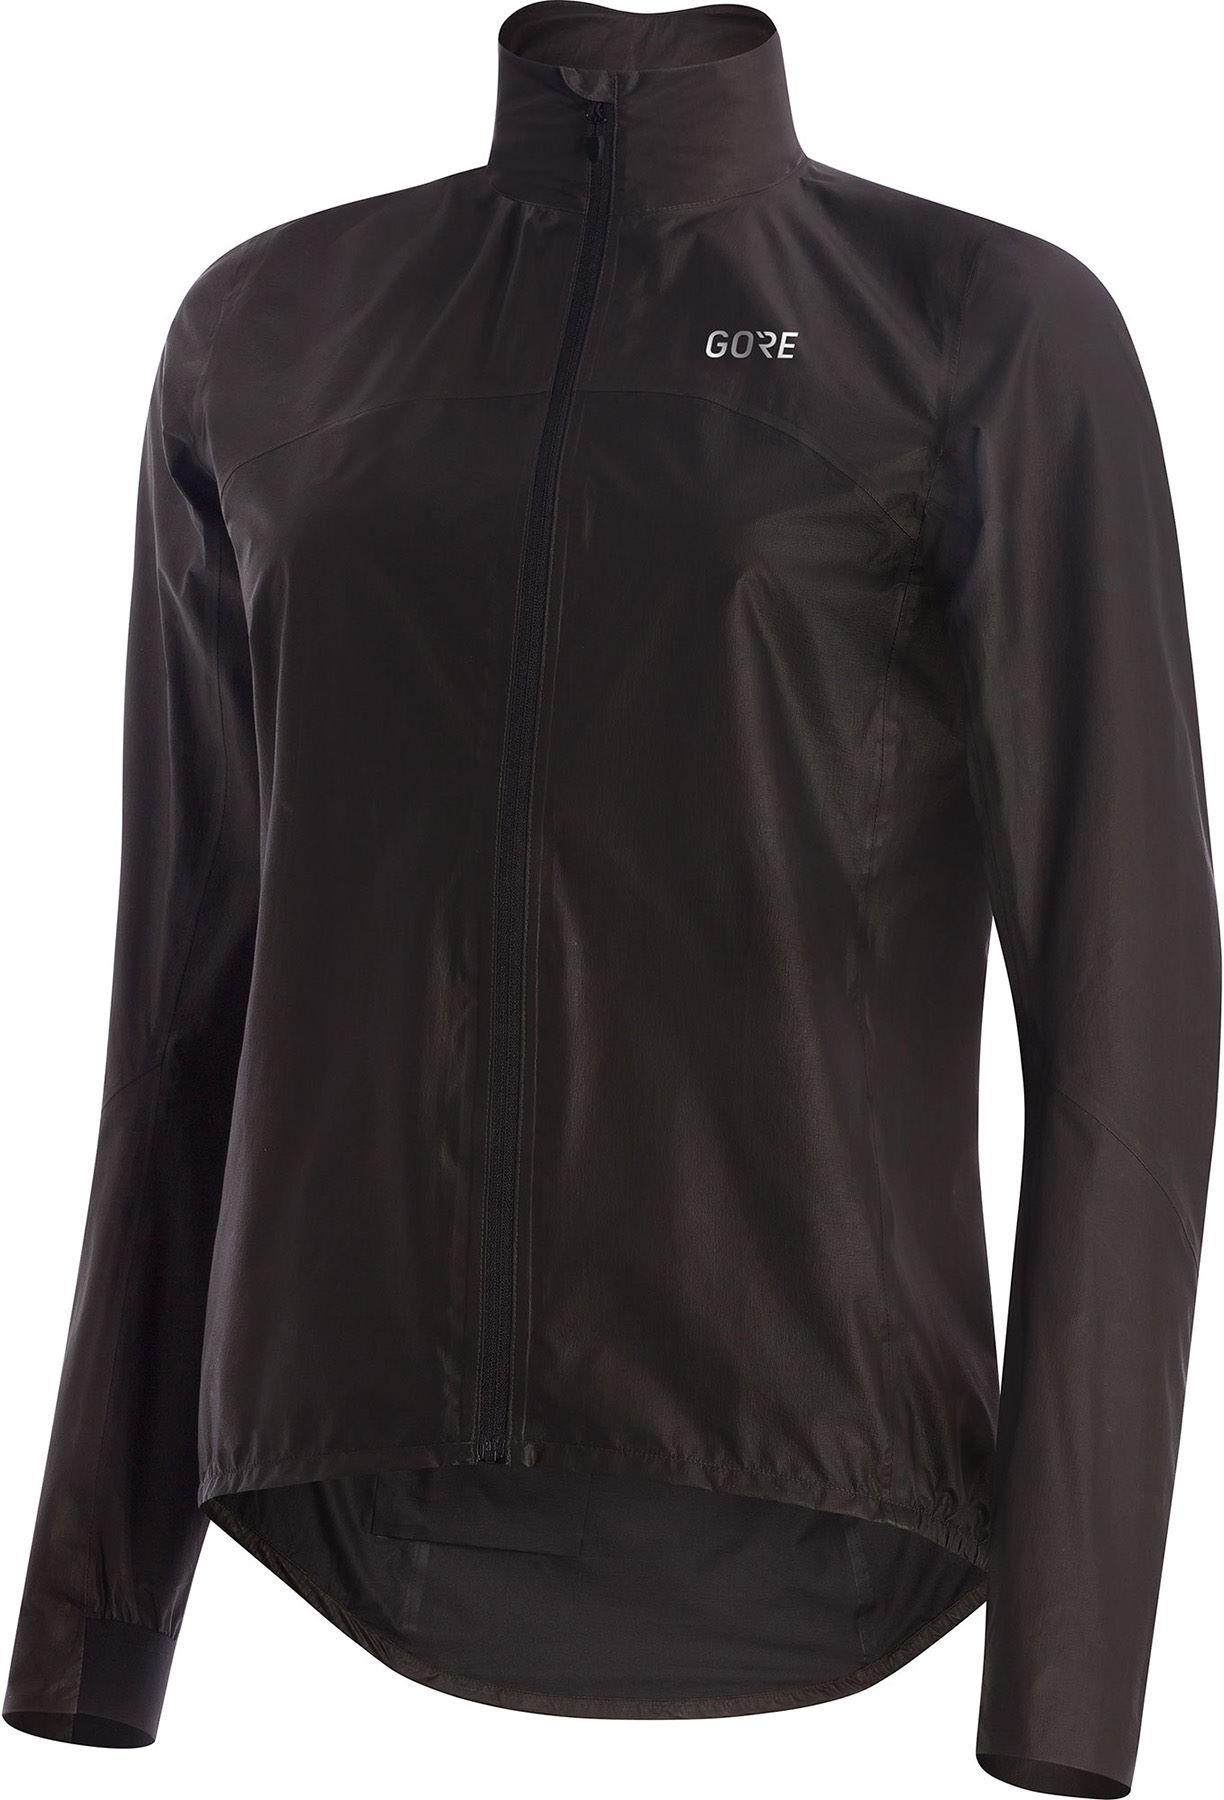 Gorewear Womens C7 Goretex Shakedry Jacket  Black